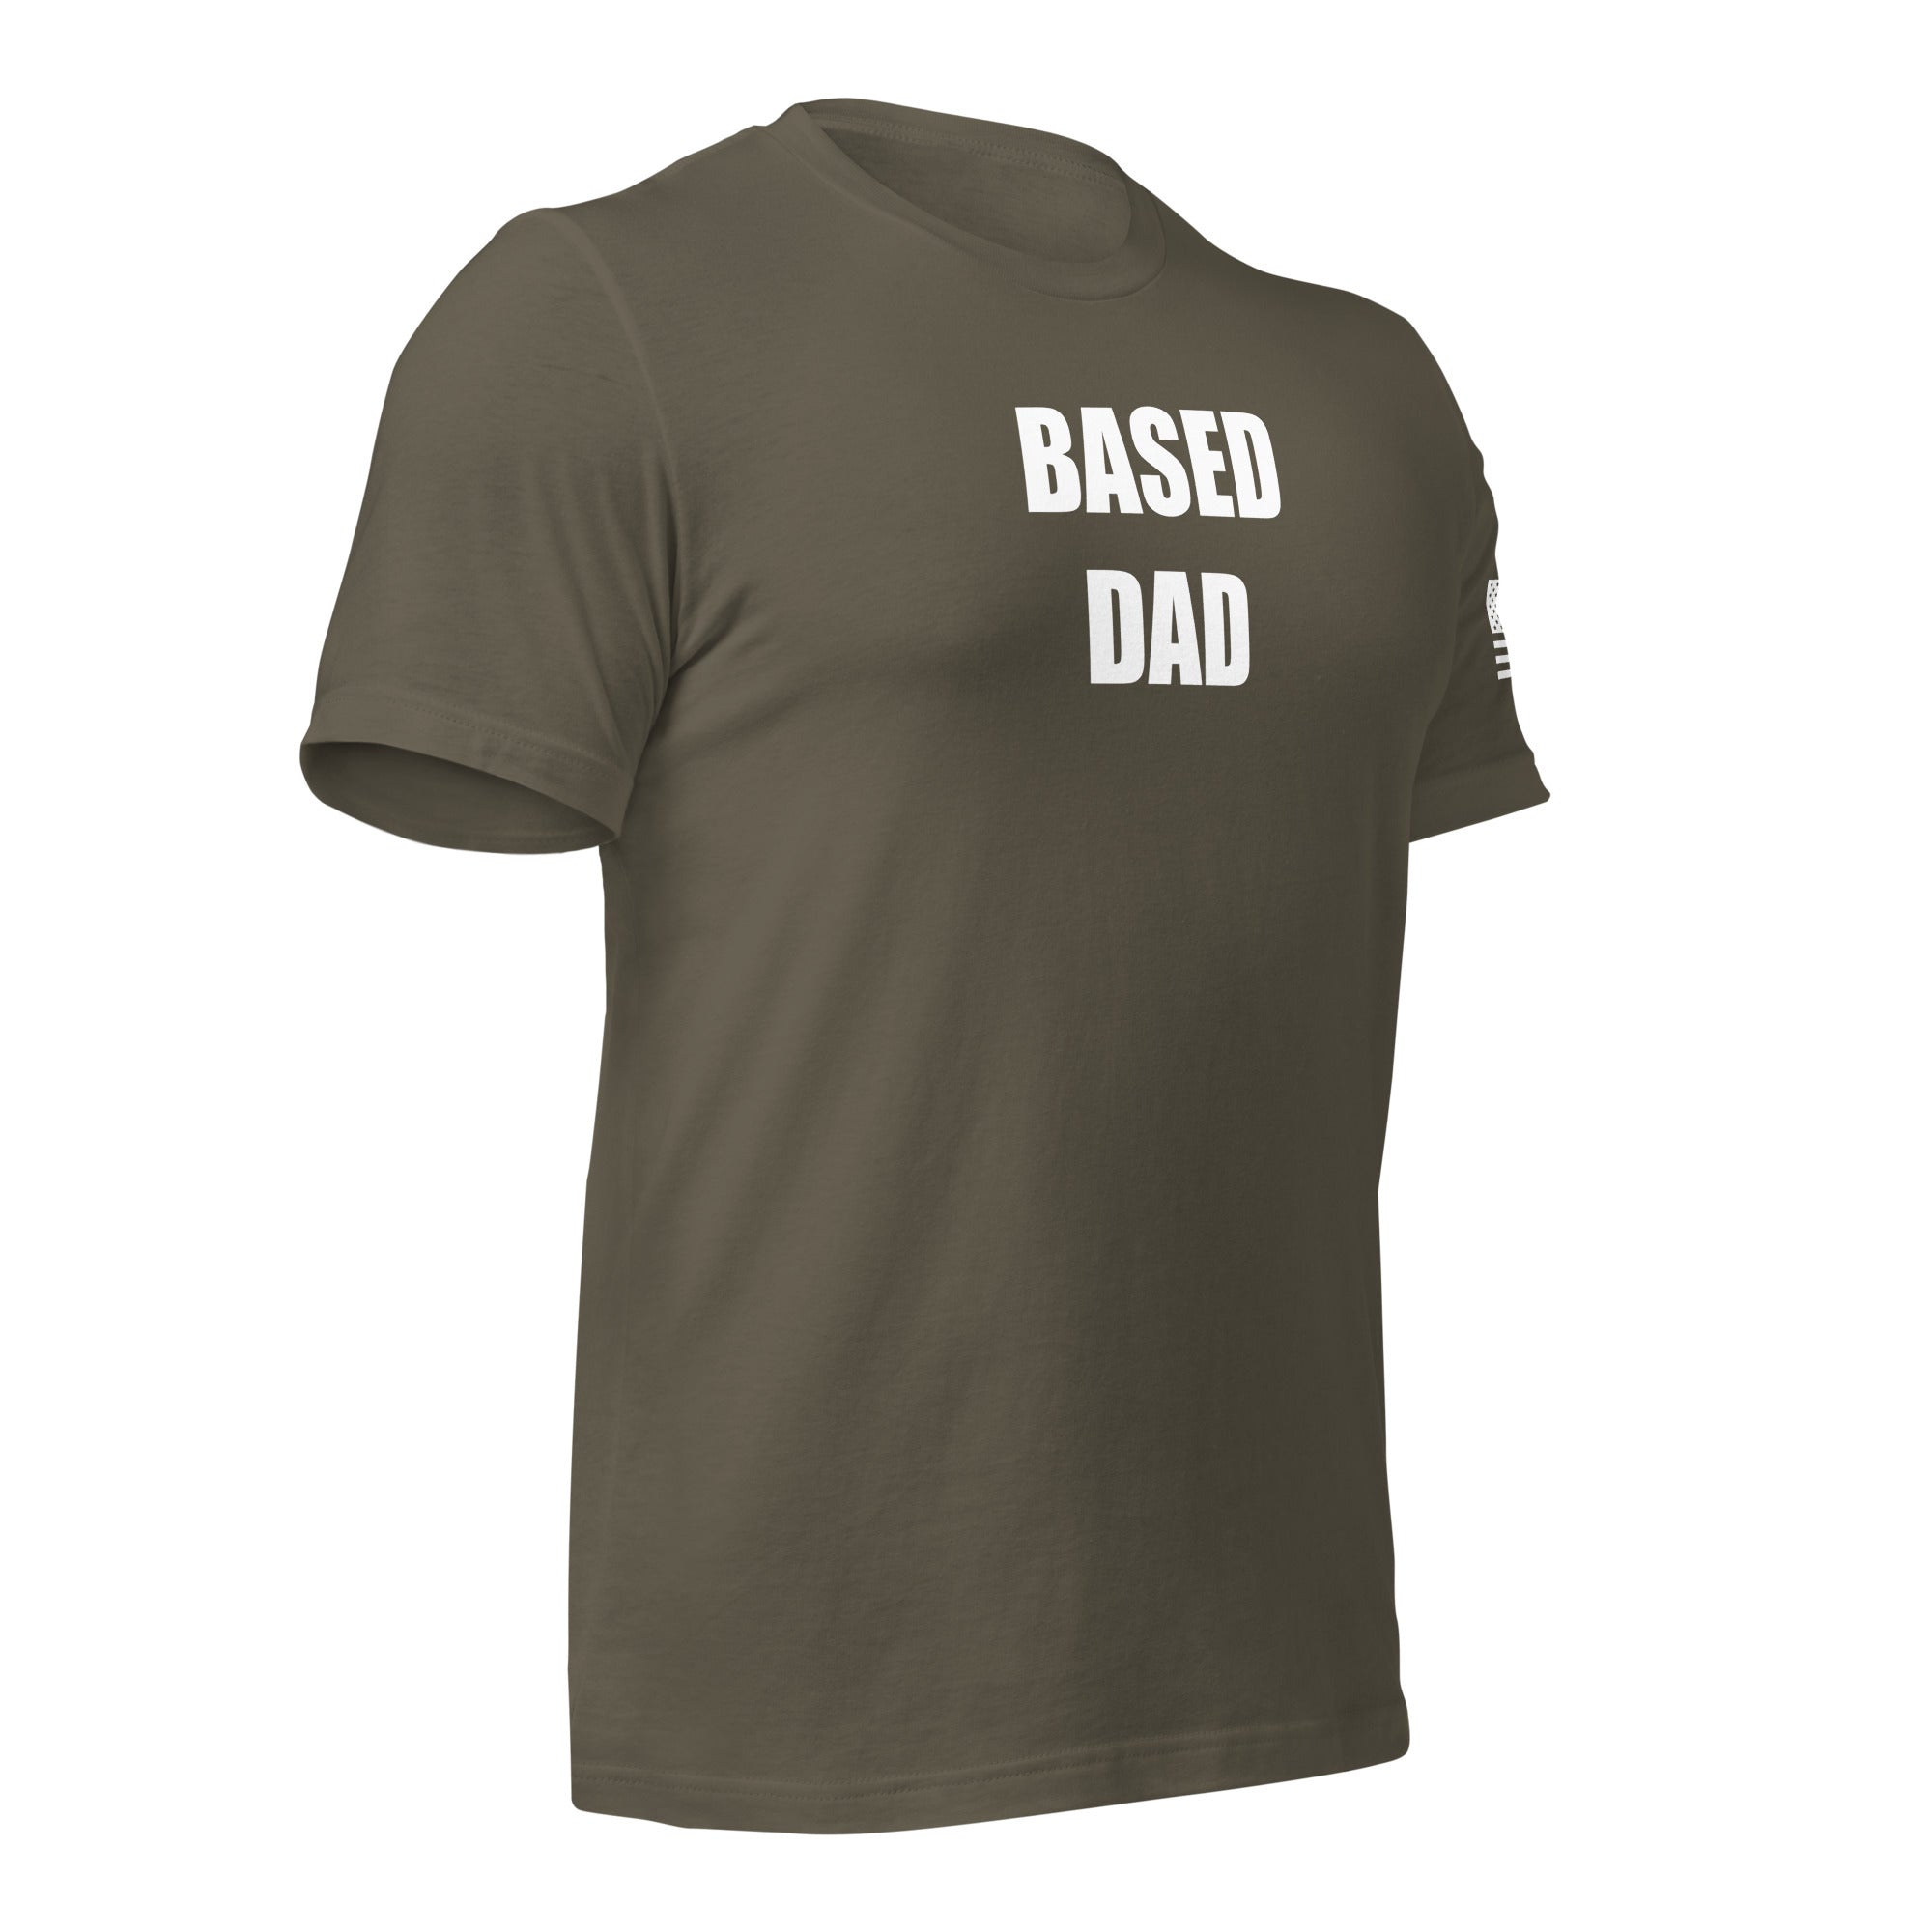 BASED DAD Team BCP T-shirt